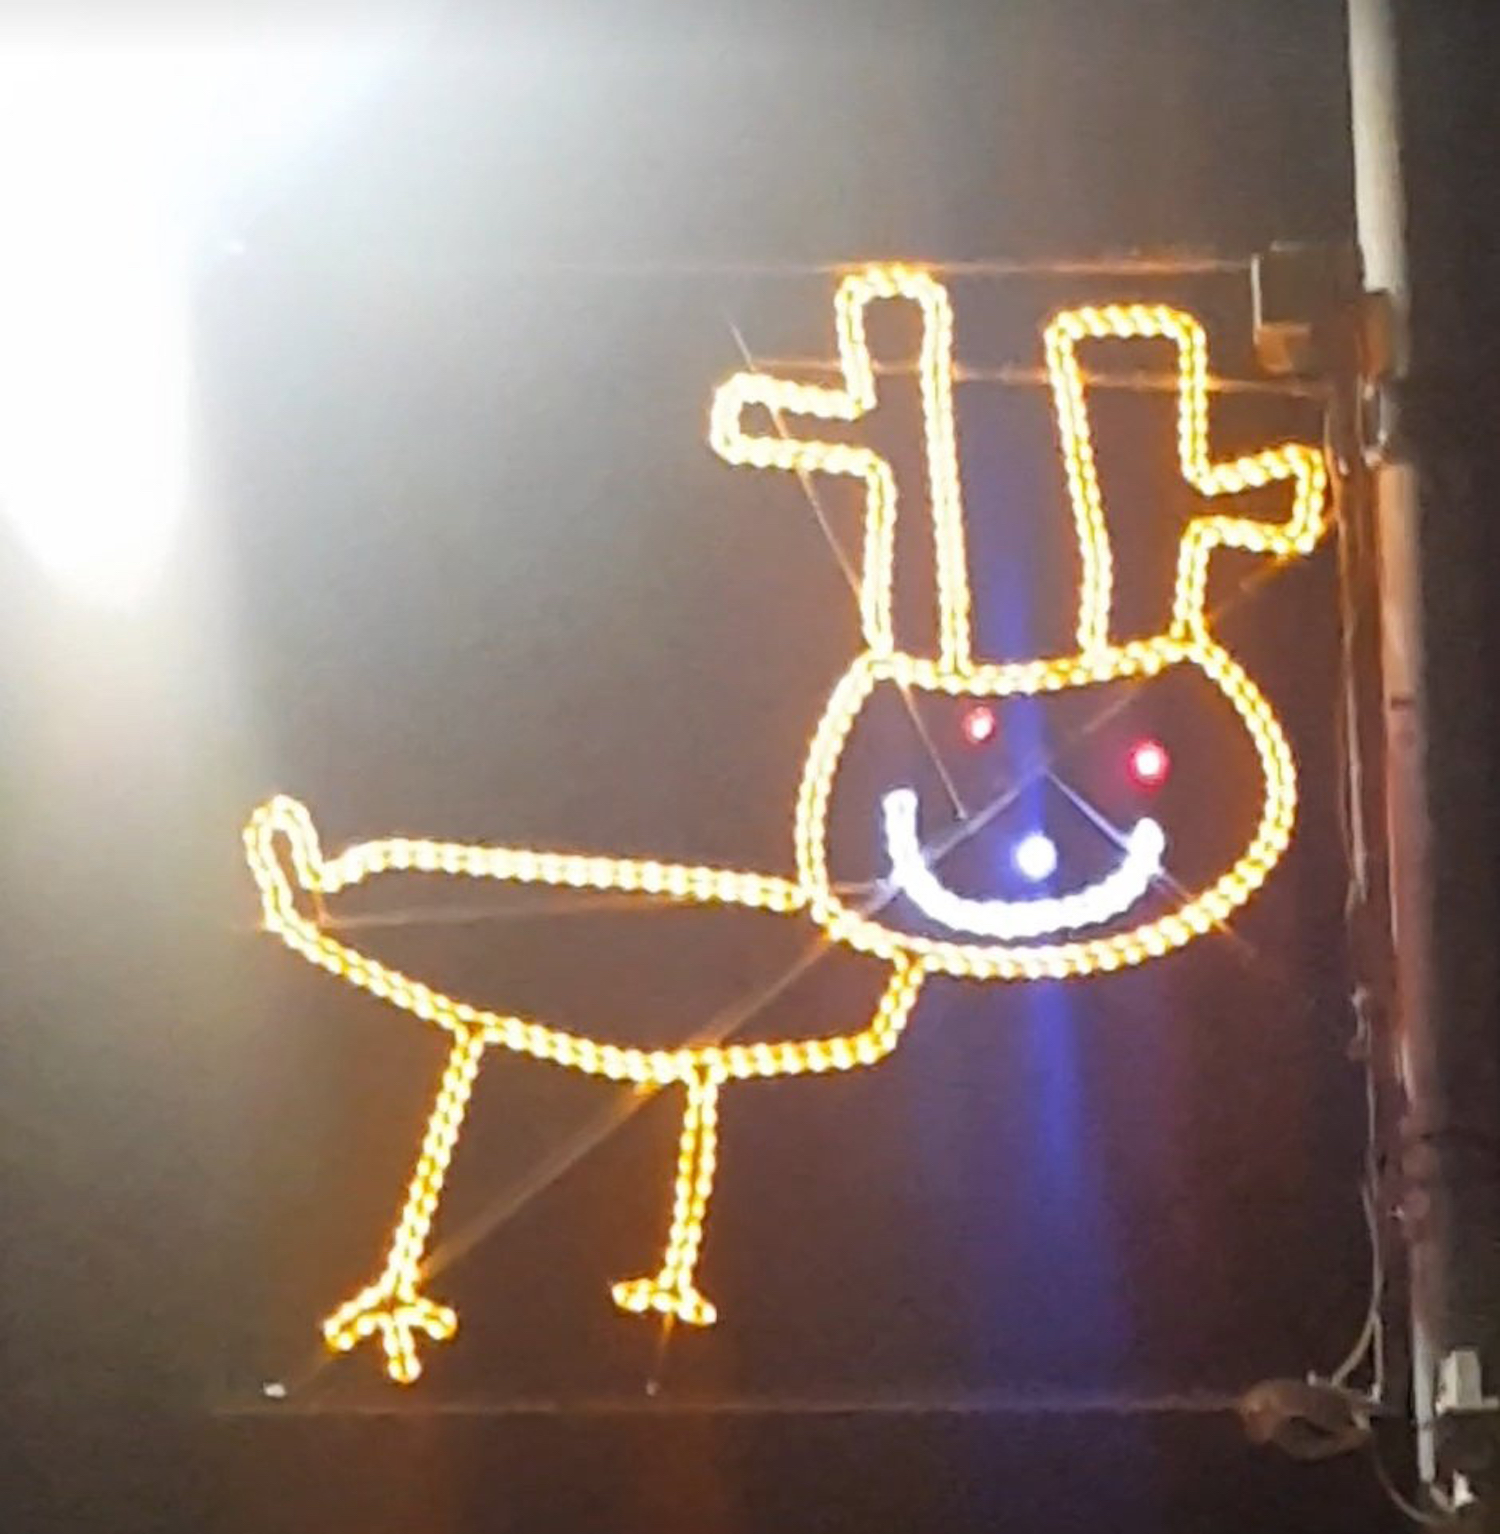 La ville de Newburgh a transformé les dessins des enfants en illuminations de Noël